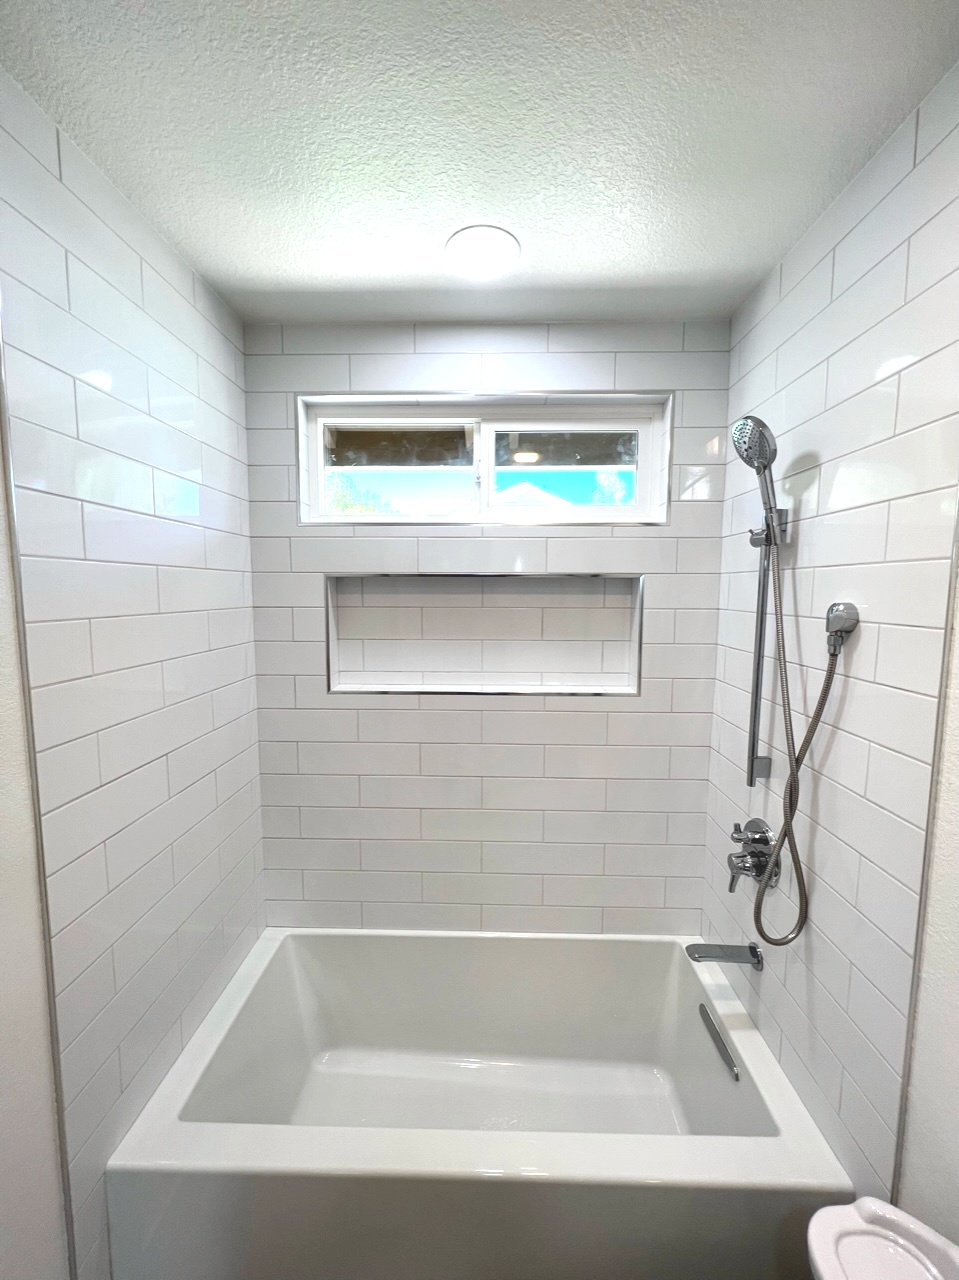 Bath C 2 - Kitchen & Bathroom Remodel in Scripps Ranch, CA